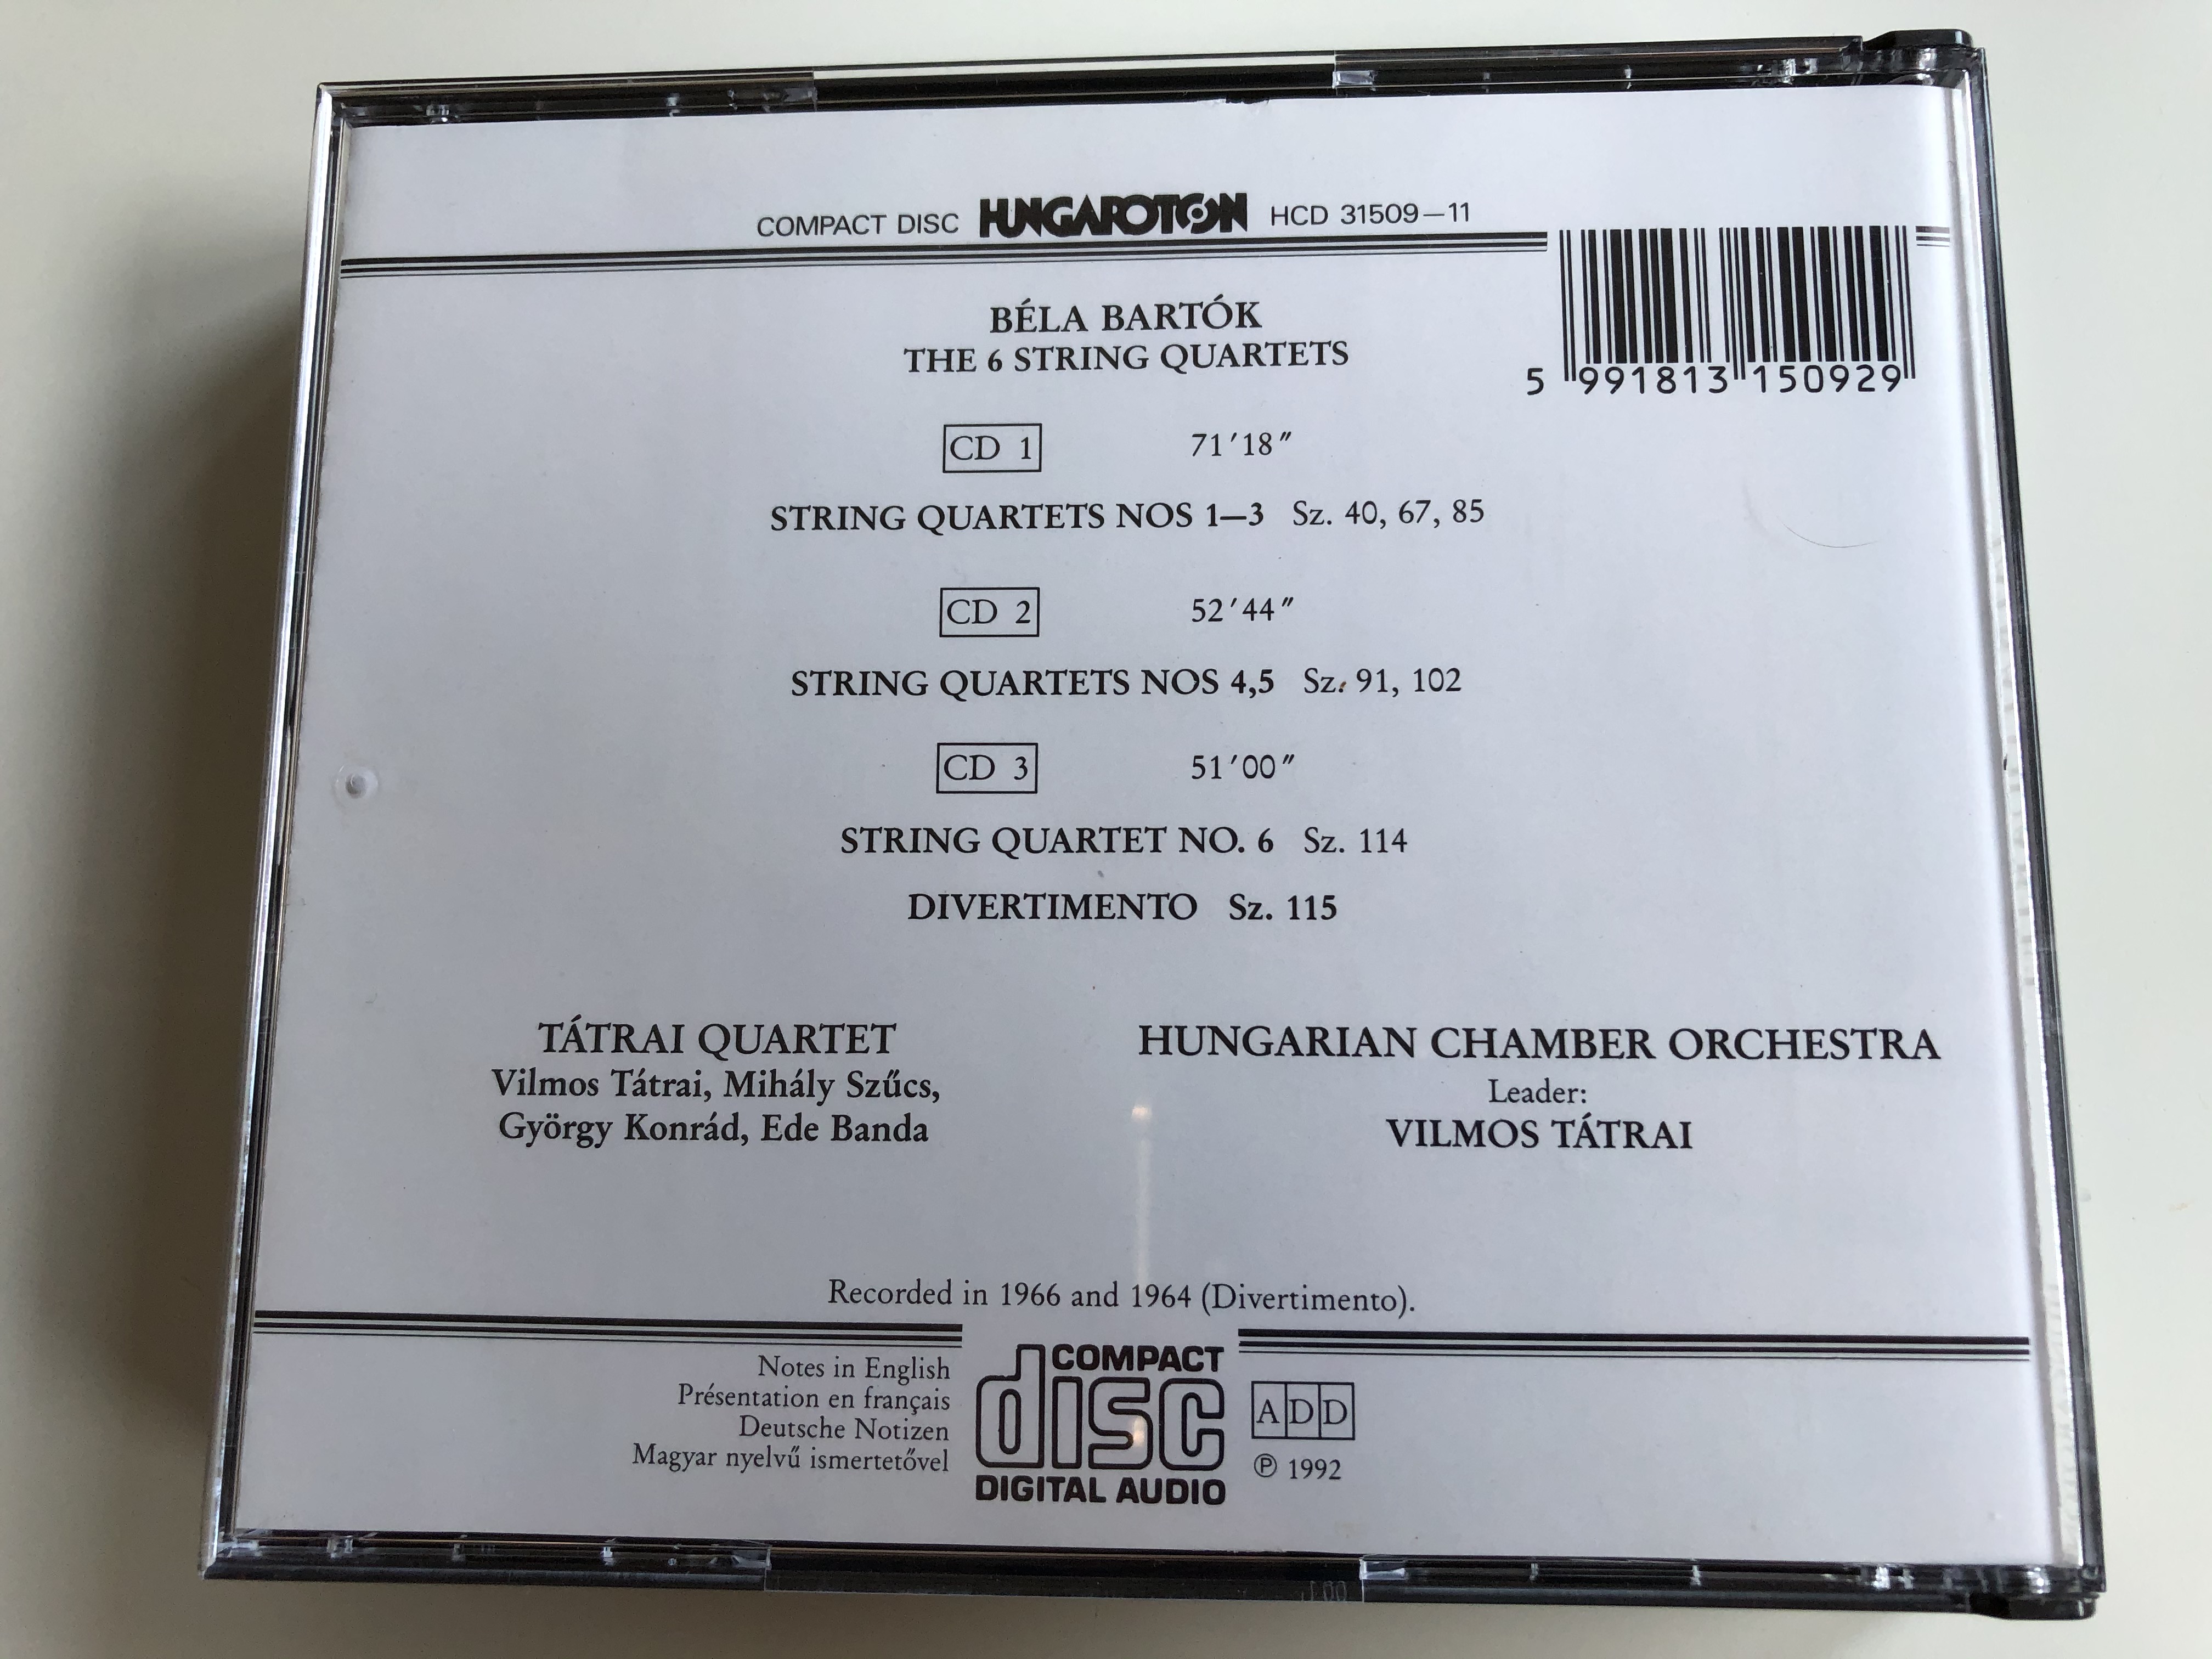 bart-k-string-quartets-nos.-1-6-divertimento-t-trai-quartet-hungarian-chamber-orchestra-vilmos-tatrai-hungaroton-3x-audio-cd-1992-stereo-hcd-31509-11-13-.jpg